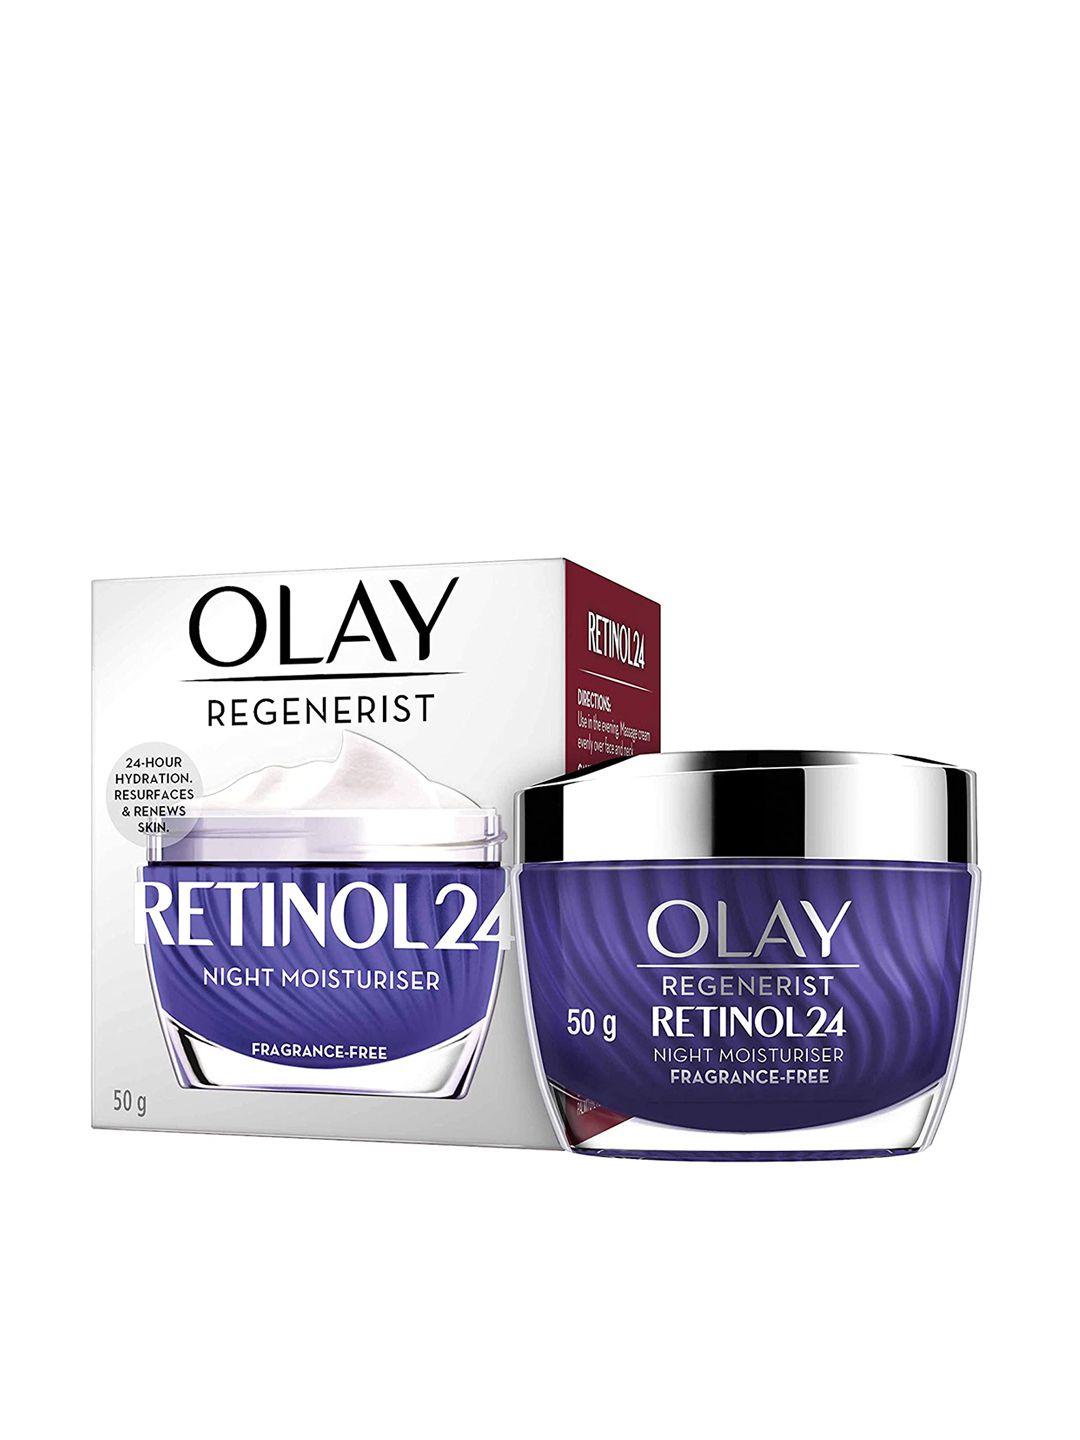 olay regenerist retinol 24 night moisturizer with niacinamide - all skin types 50 g